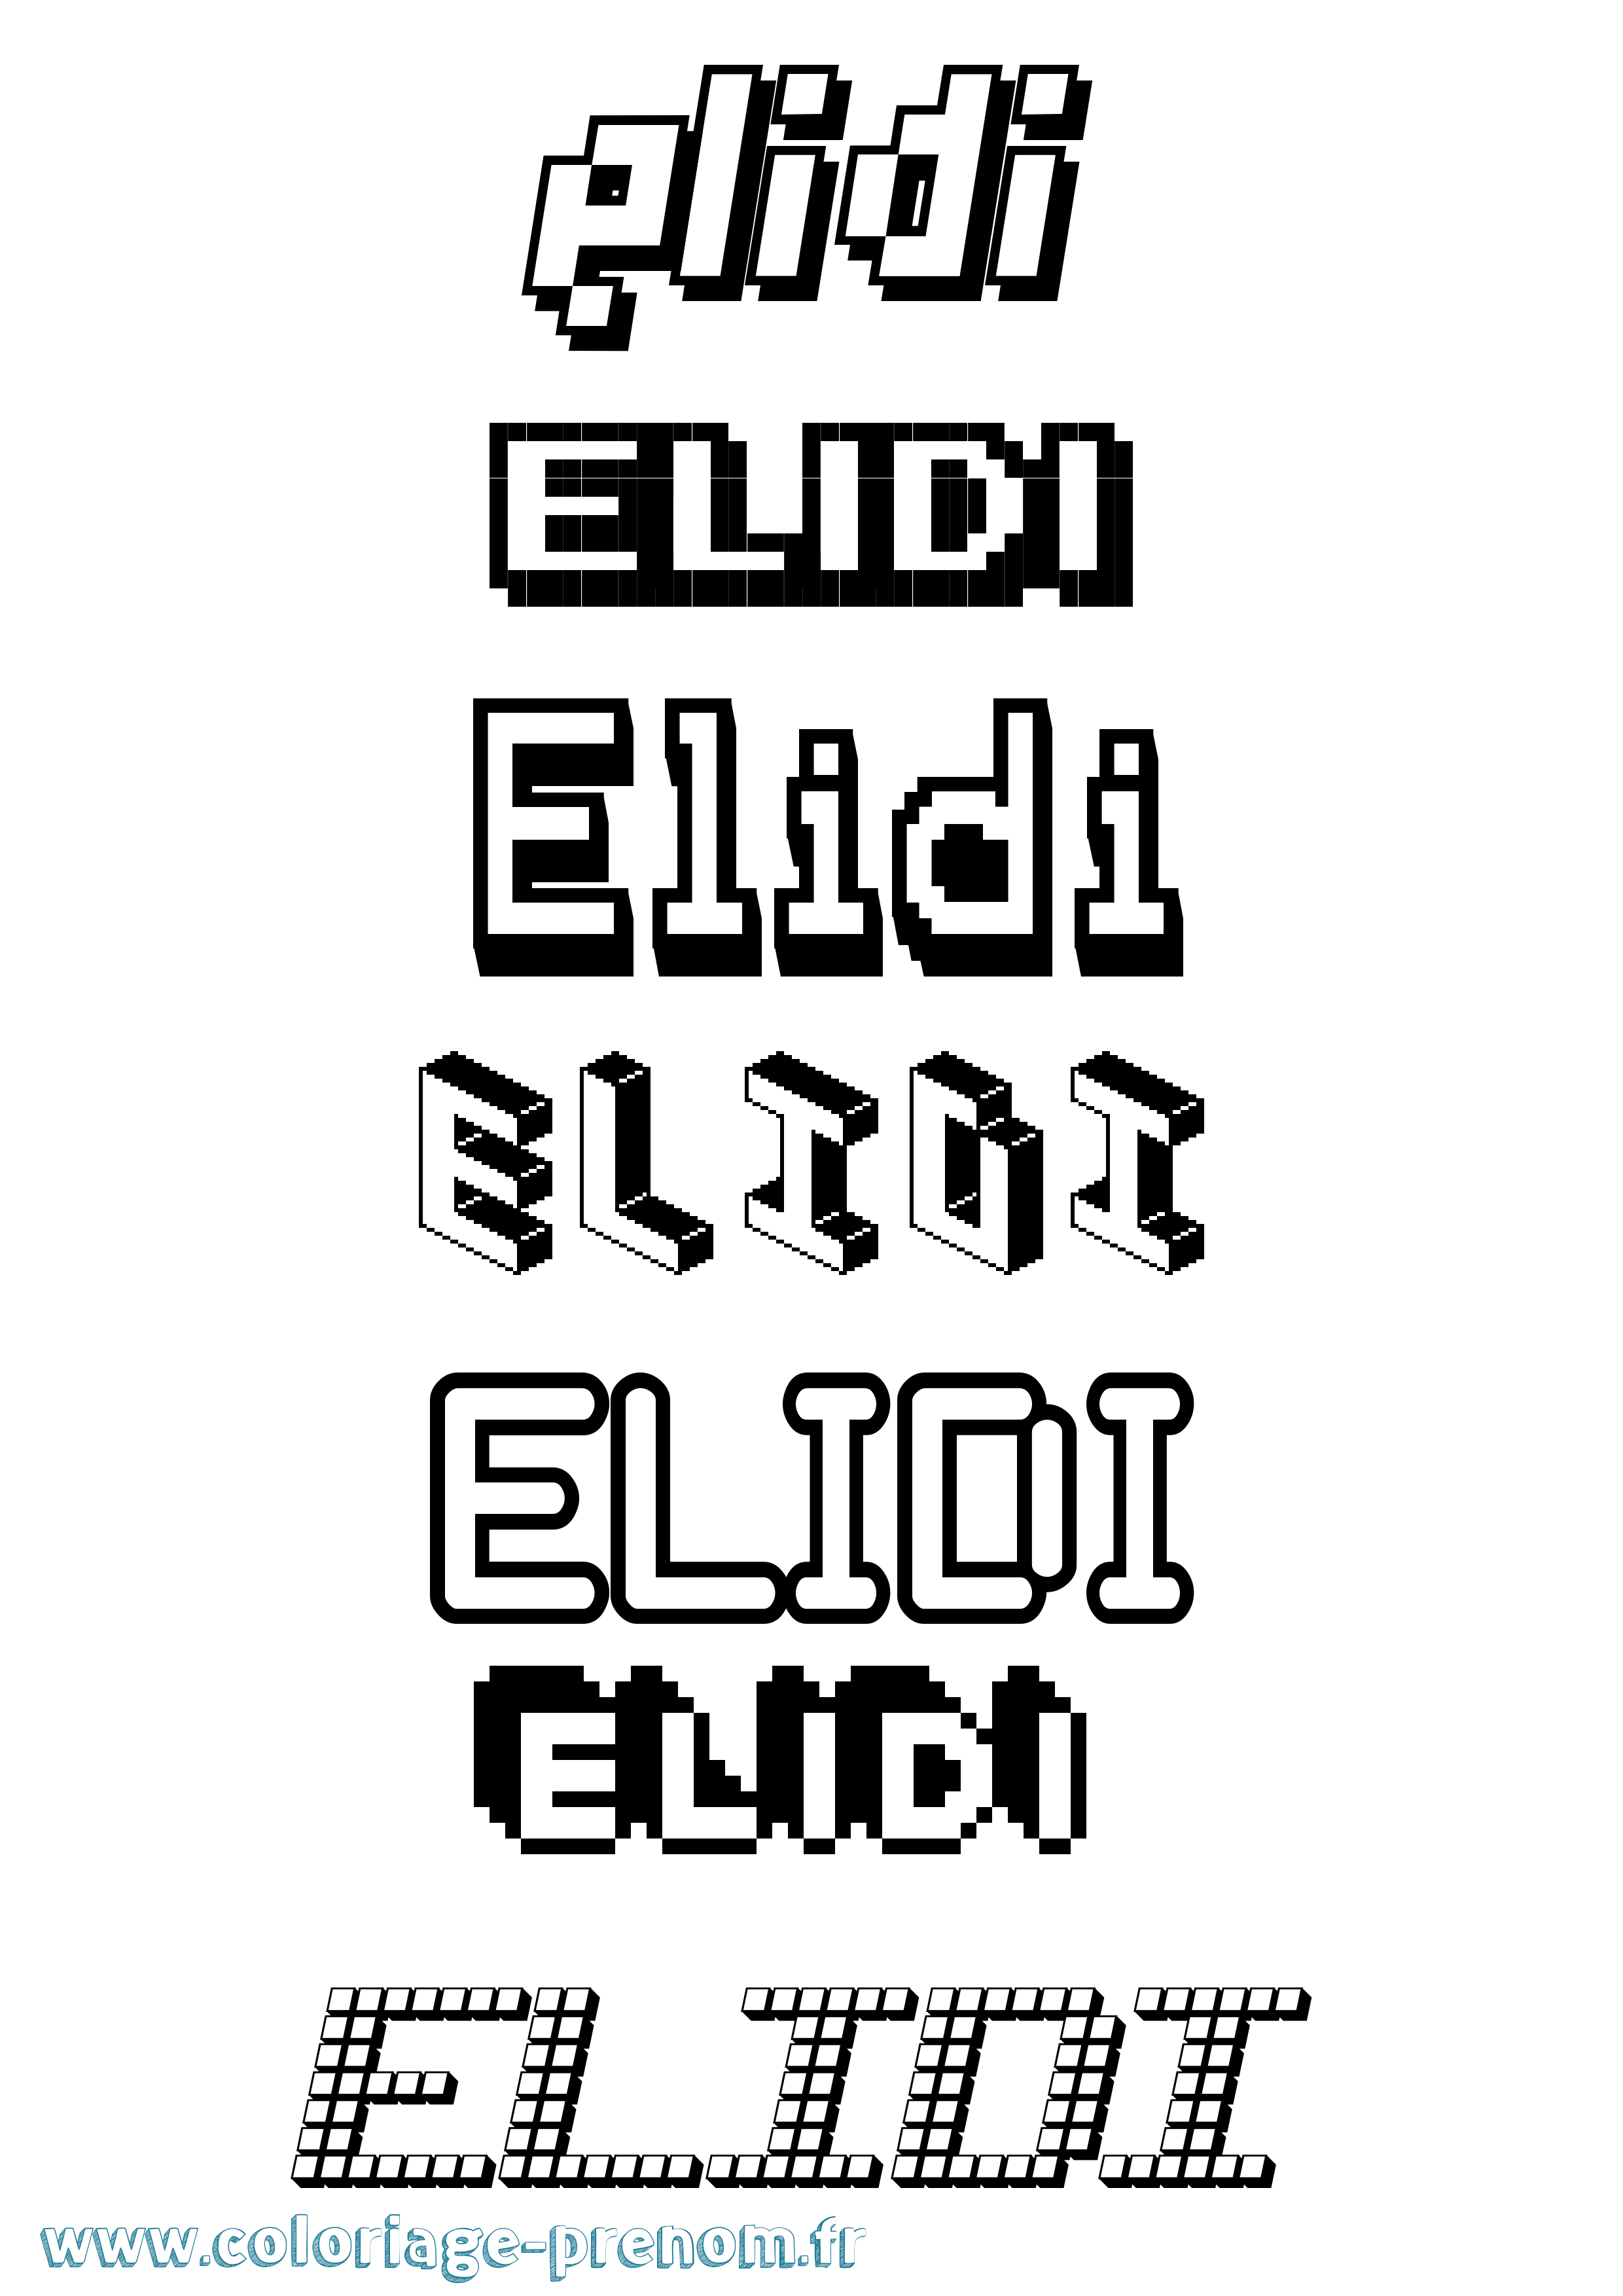 Coloriage prénom Elidi Pixel